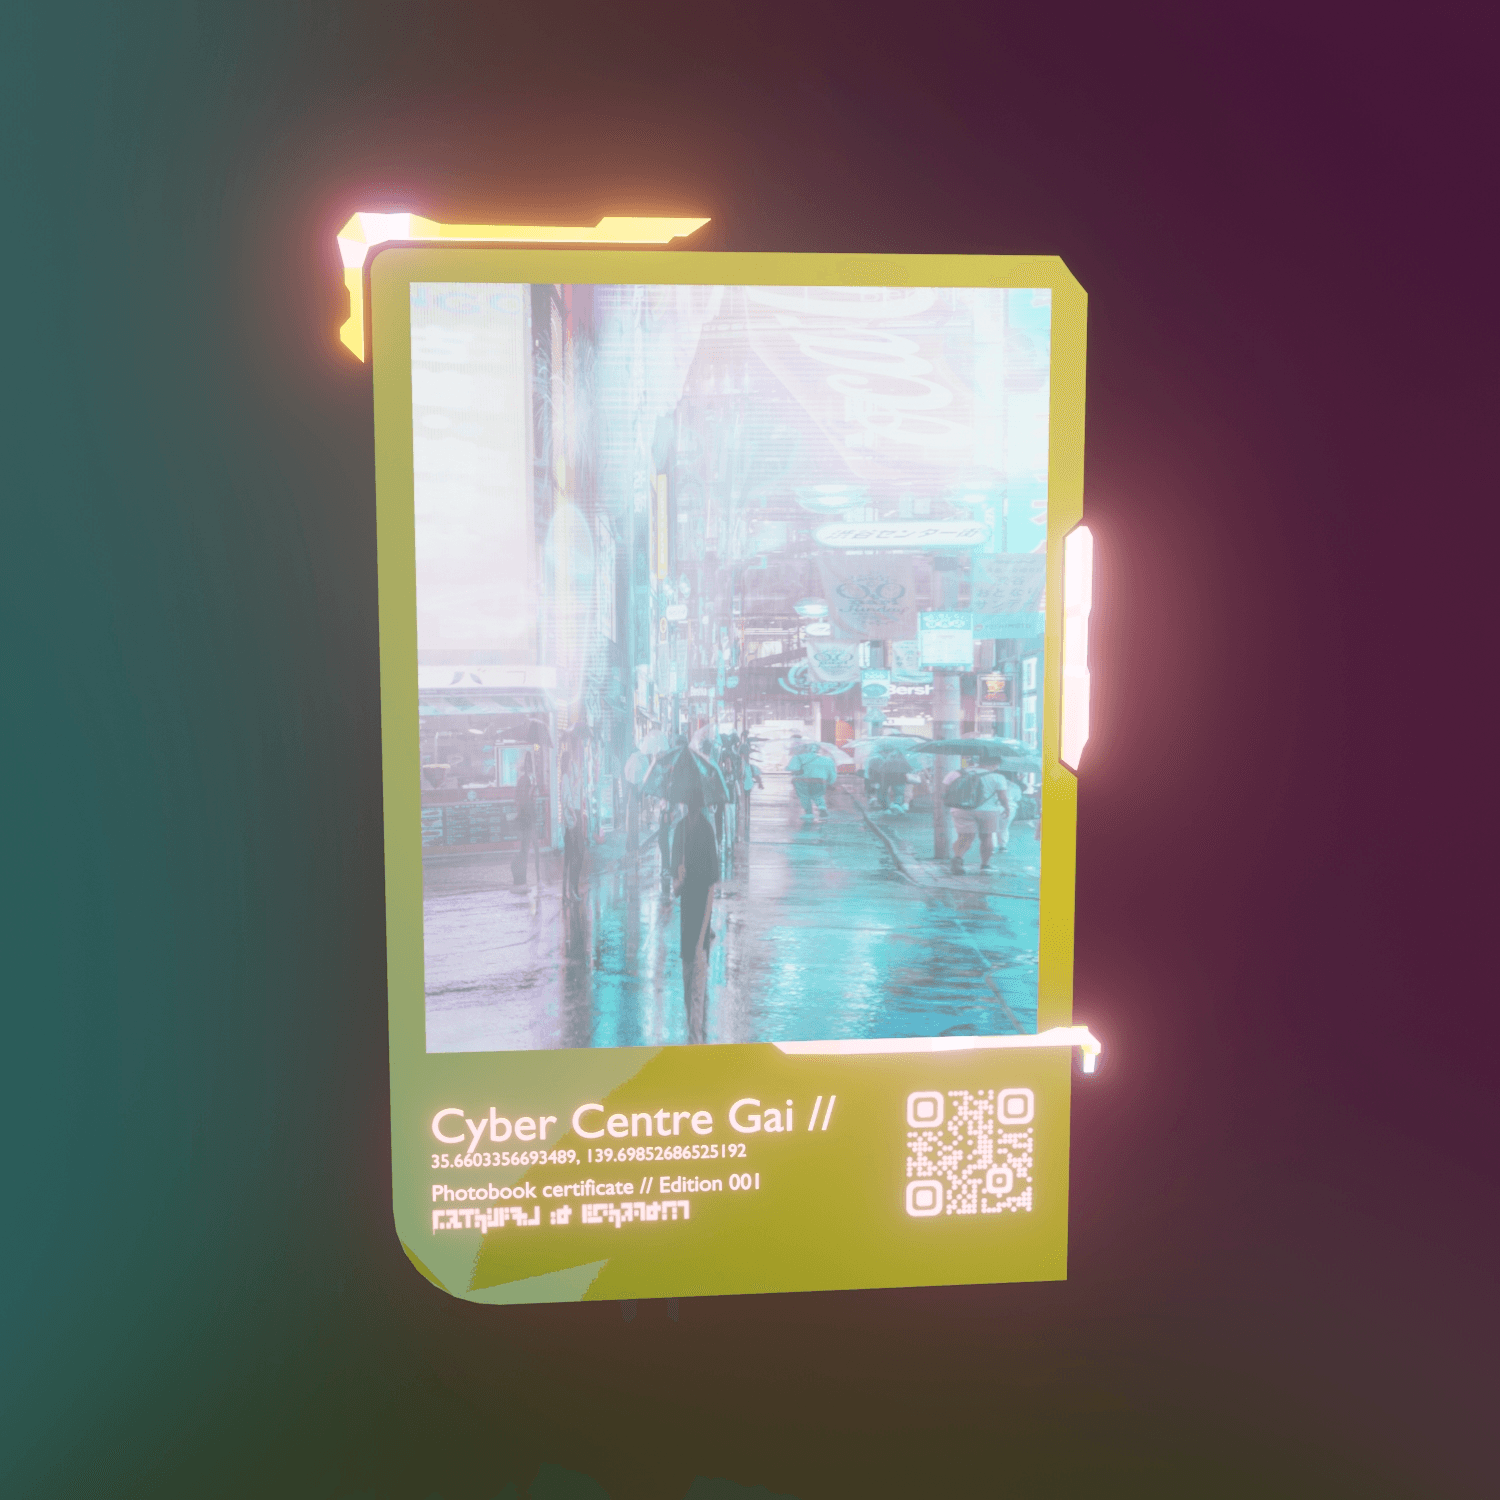 Cyber Centre Gai - Gold Edition